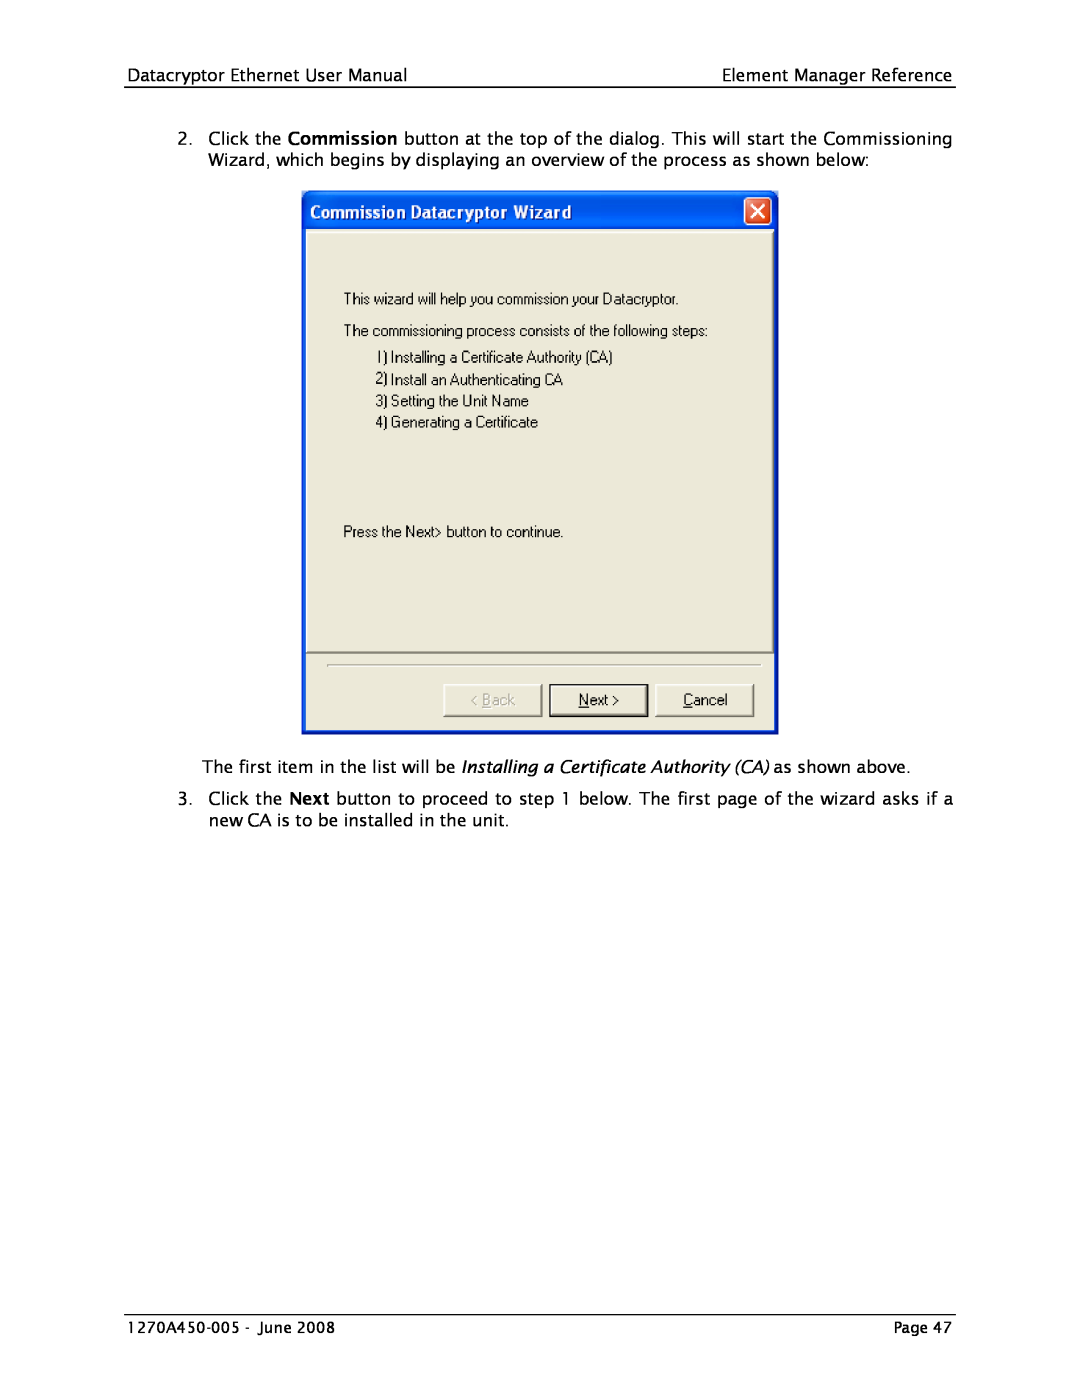 Angenieux 1270A450-005 user manual Datacryptor Ethernet User Manual 